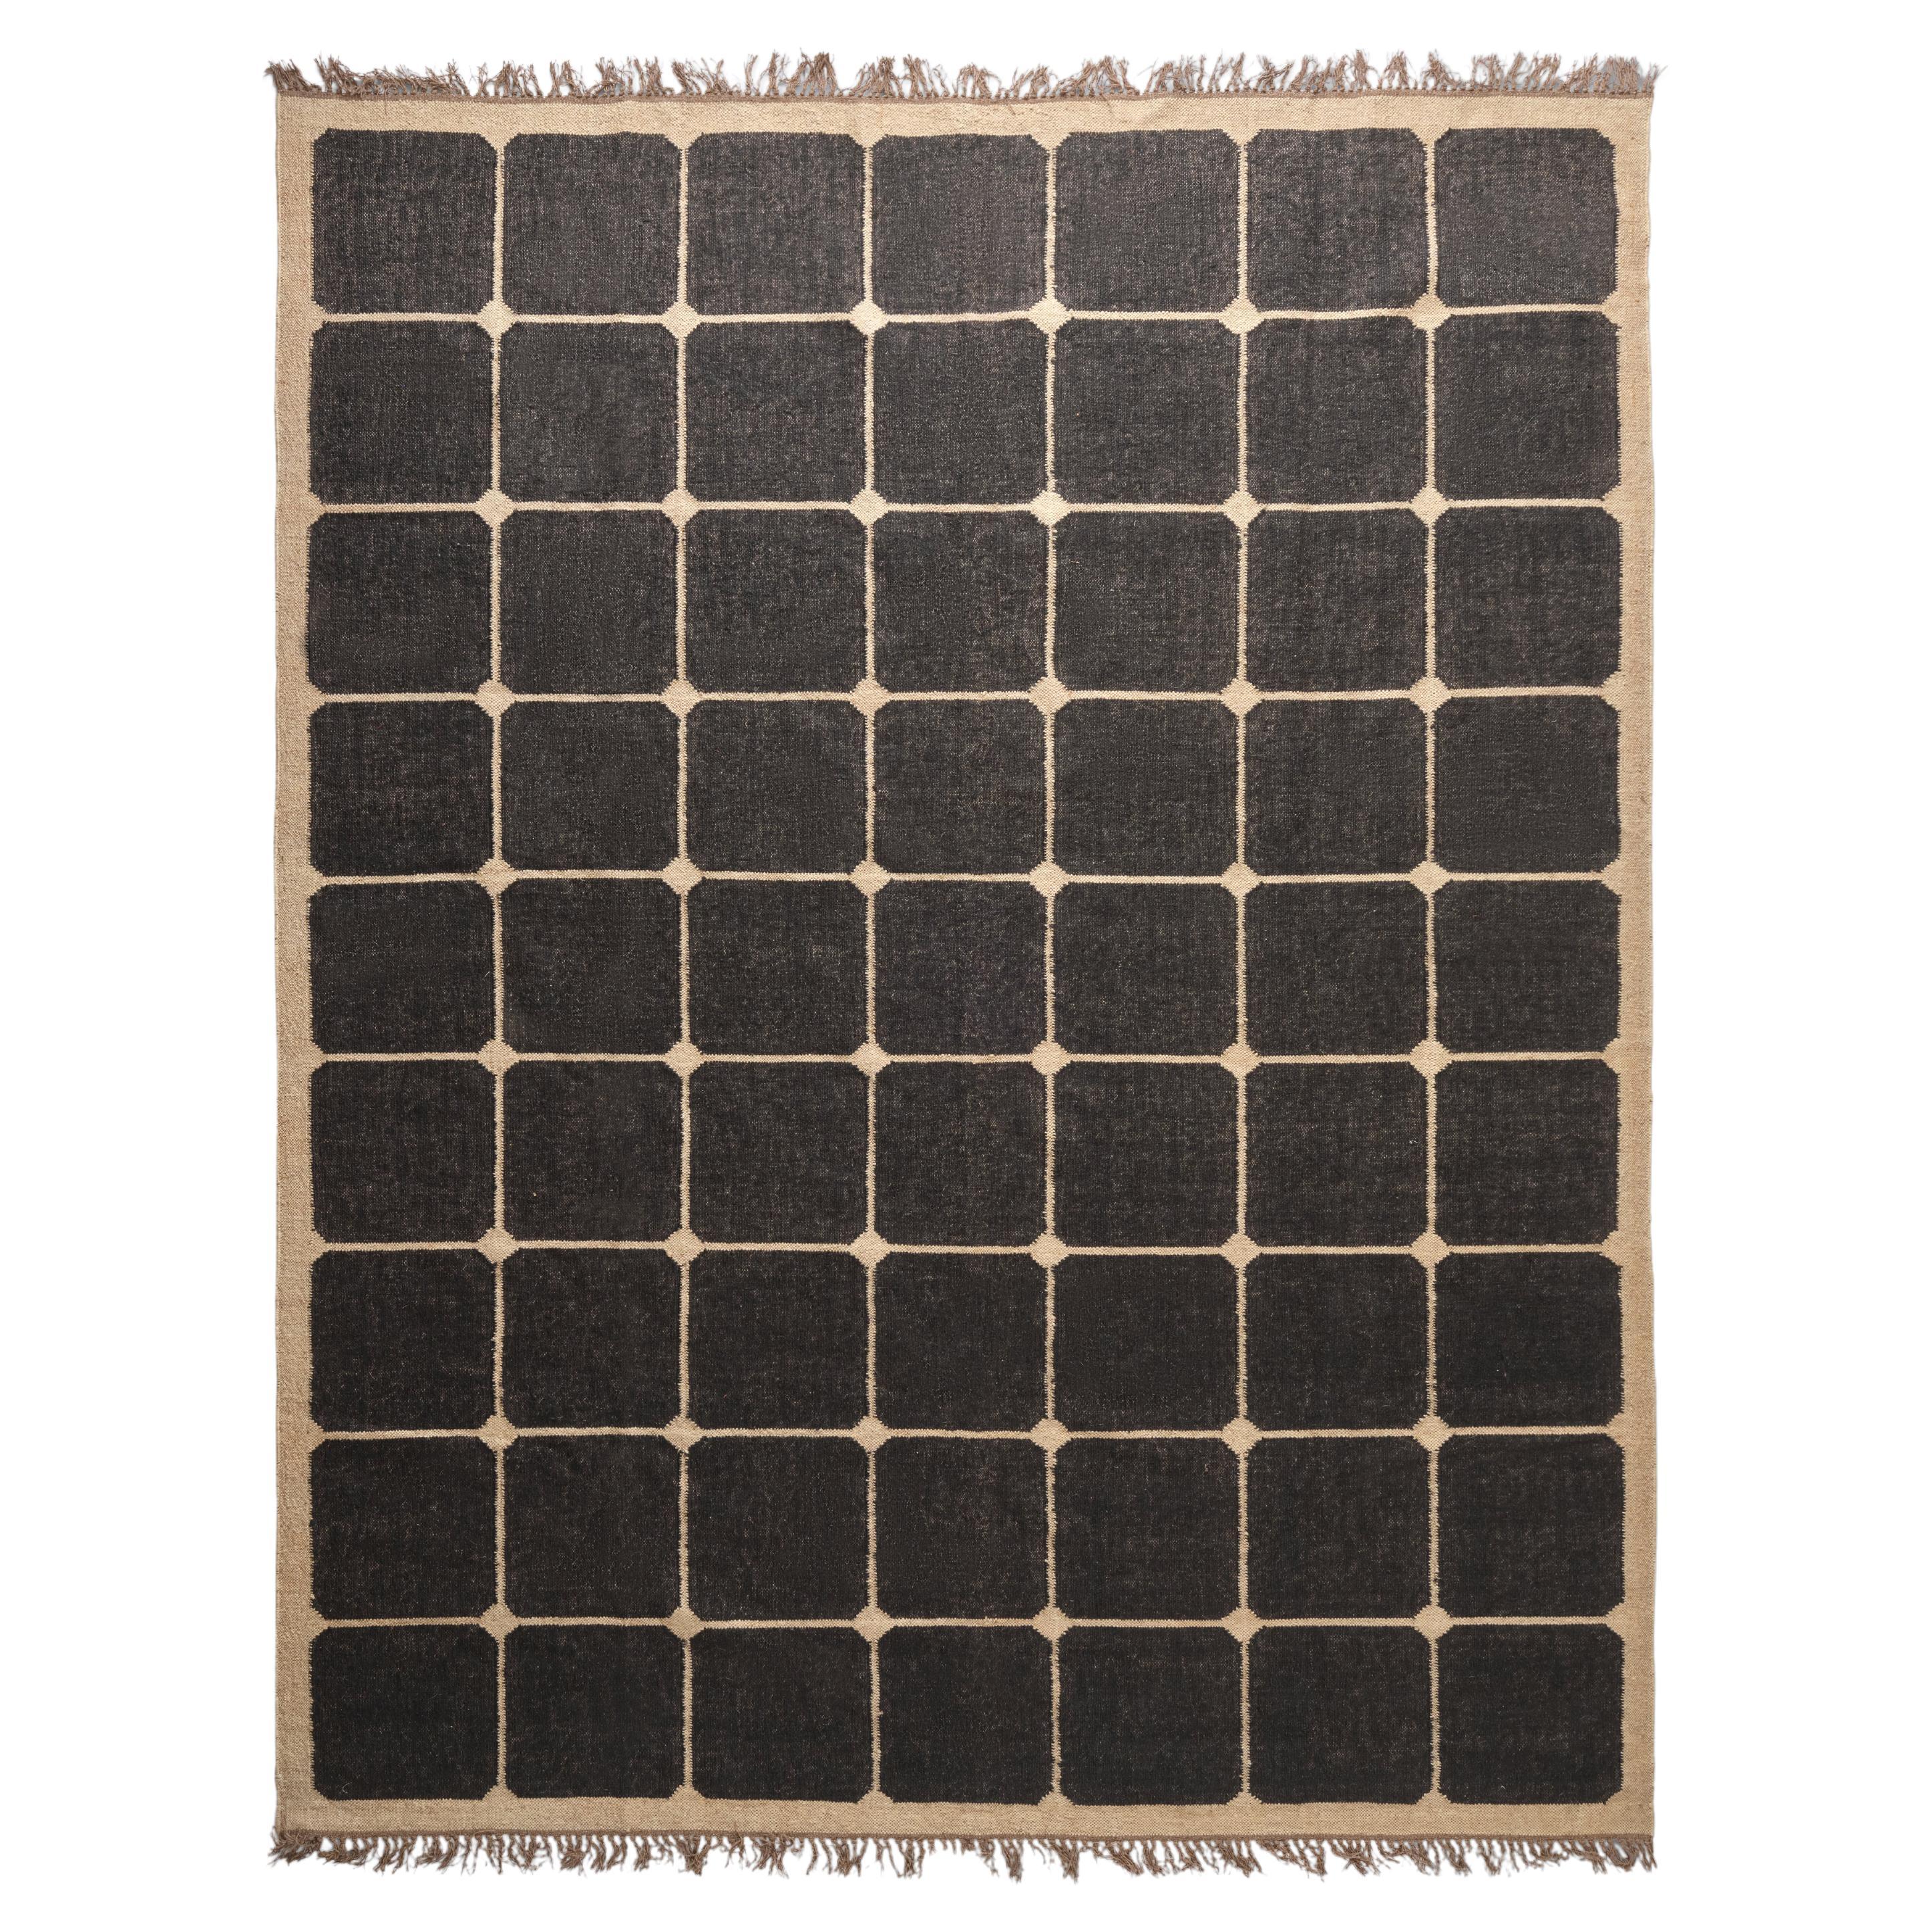 The Forsyth Checkerboard Rug - Dark Tile Checks in Off Black, 9x12 For Sale